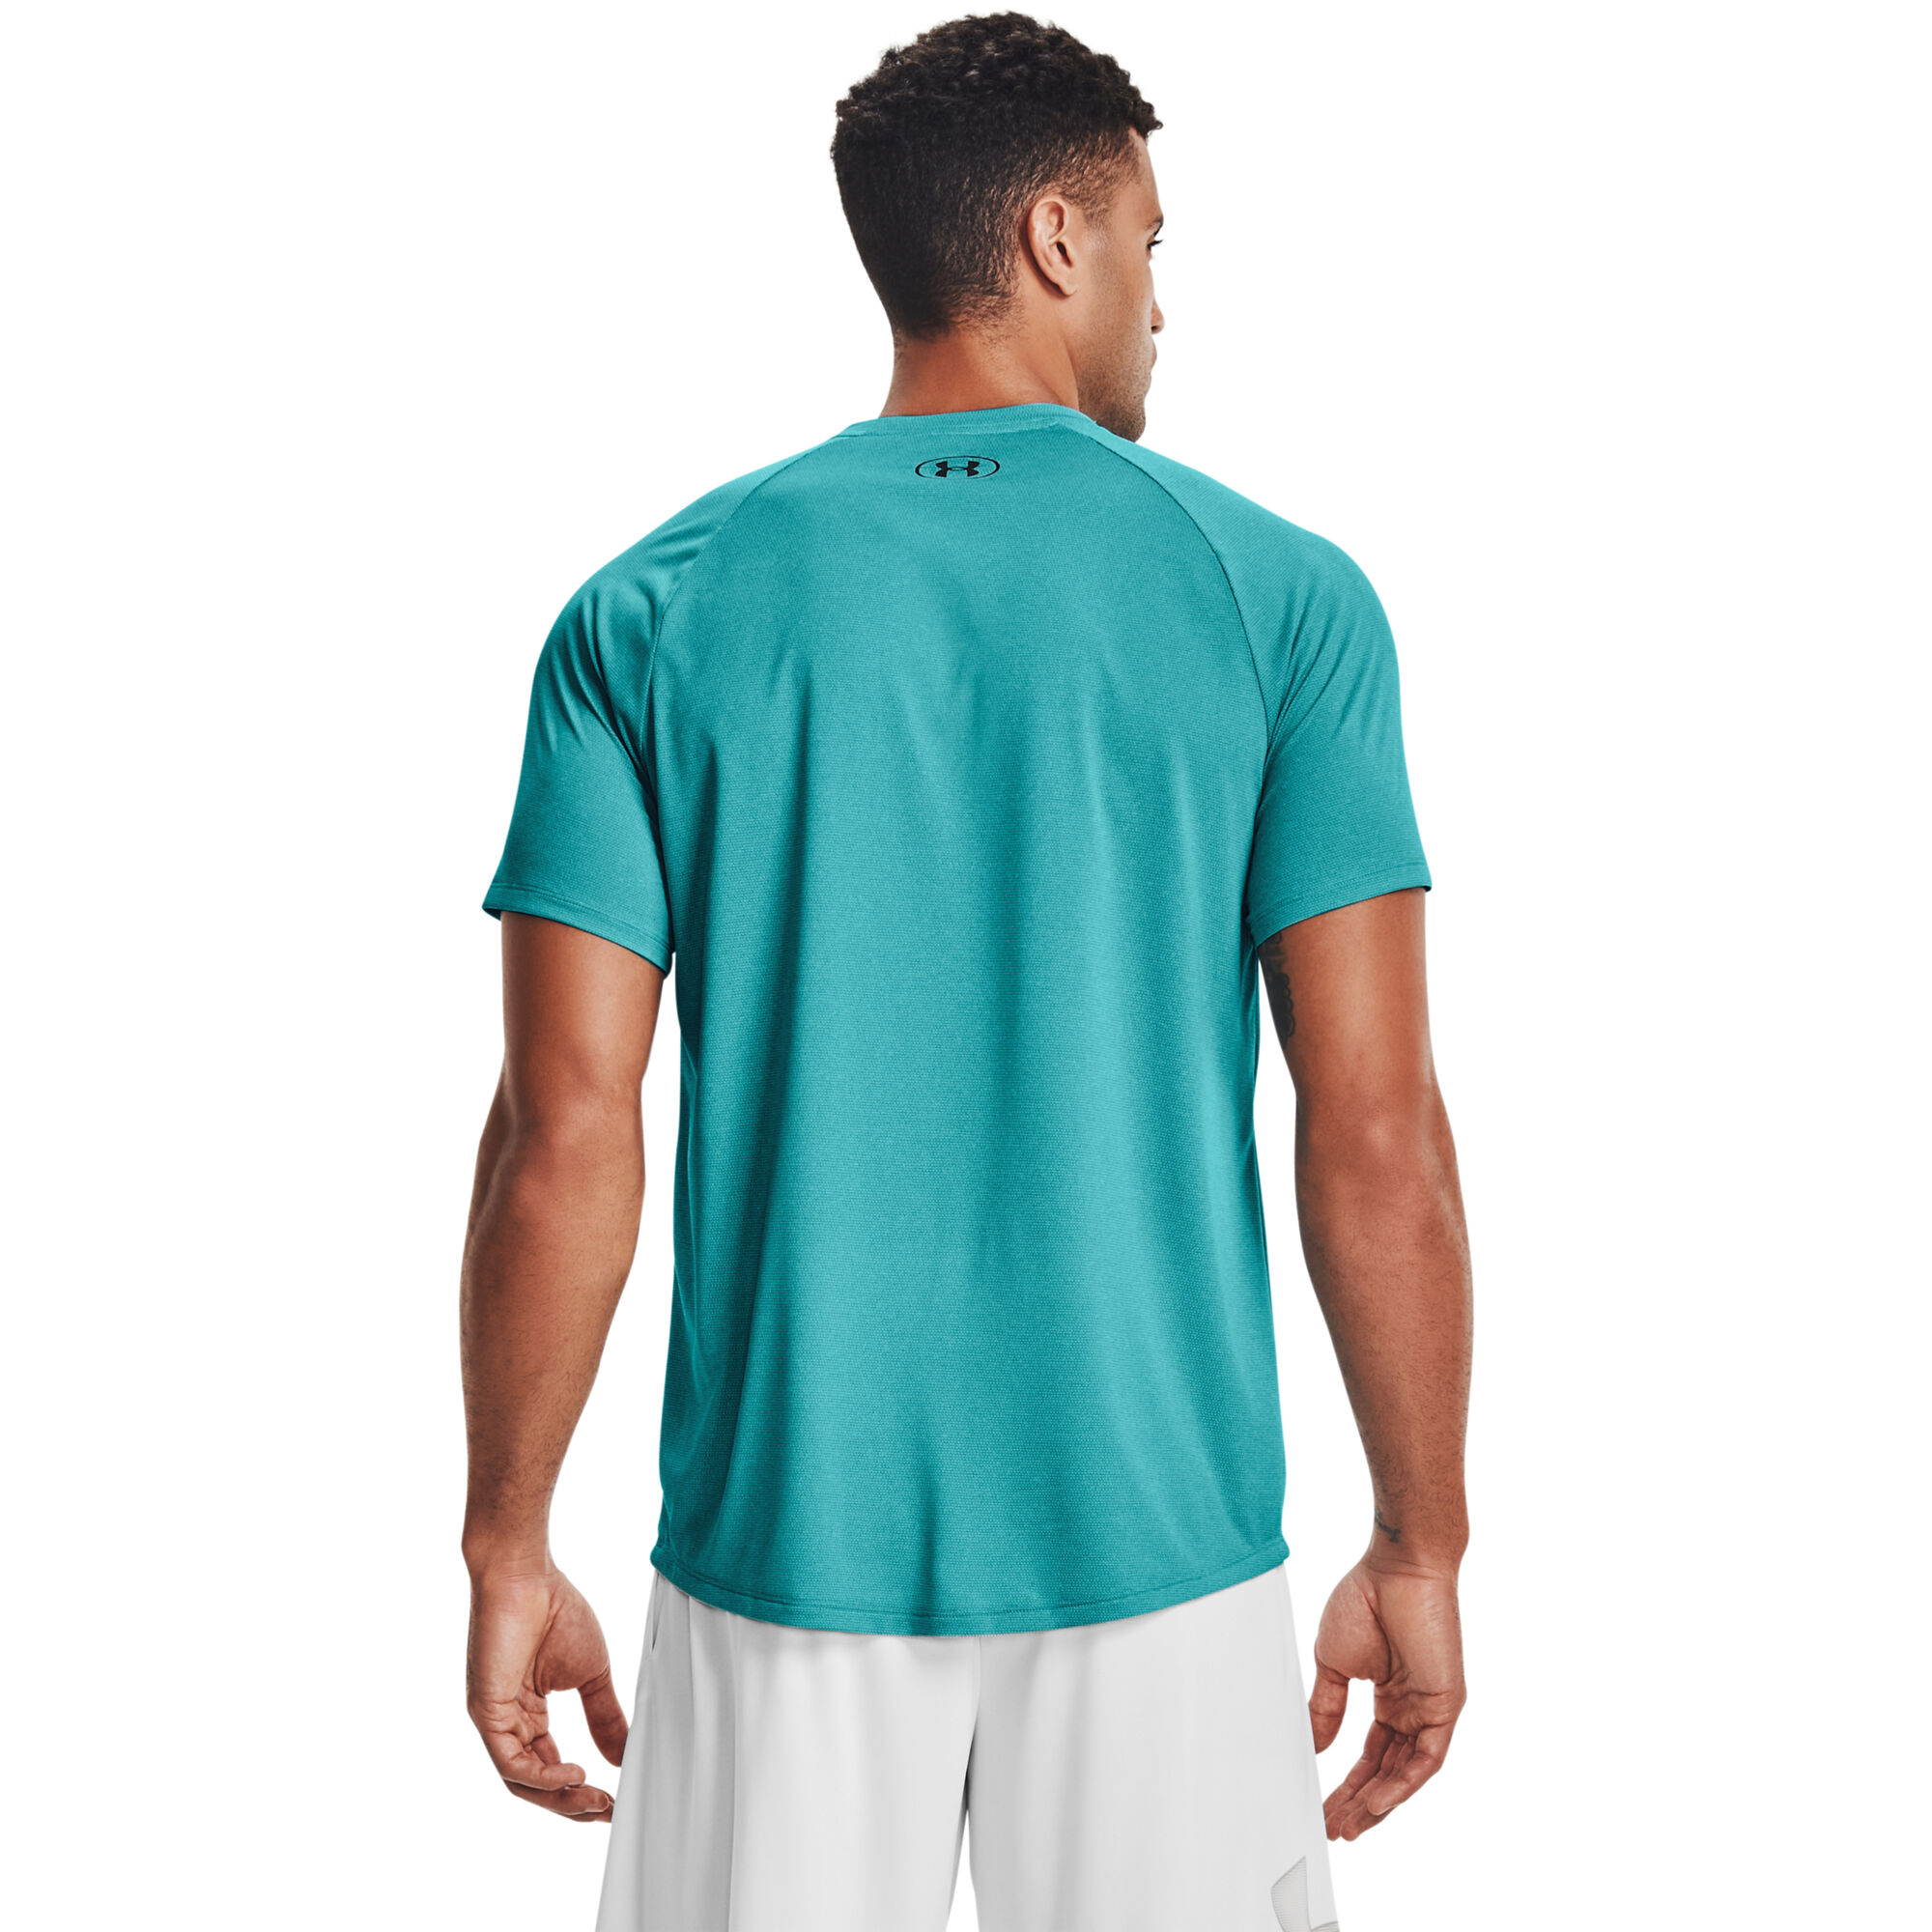 Buy Under Armour Tech 2.0 Novelty T-Shirt Men Turquoise online